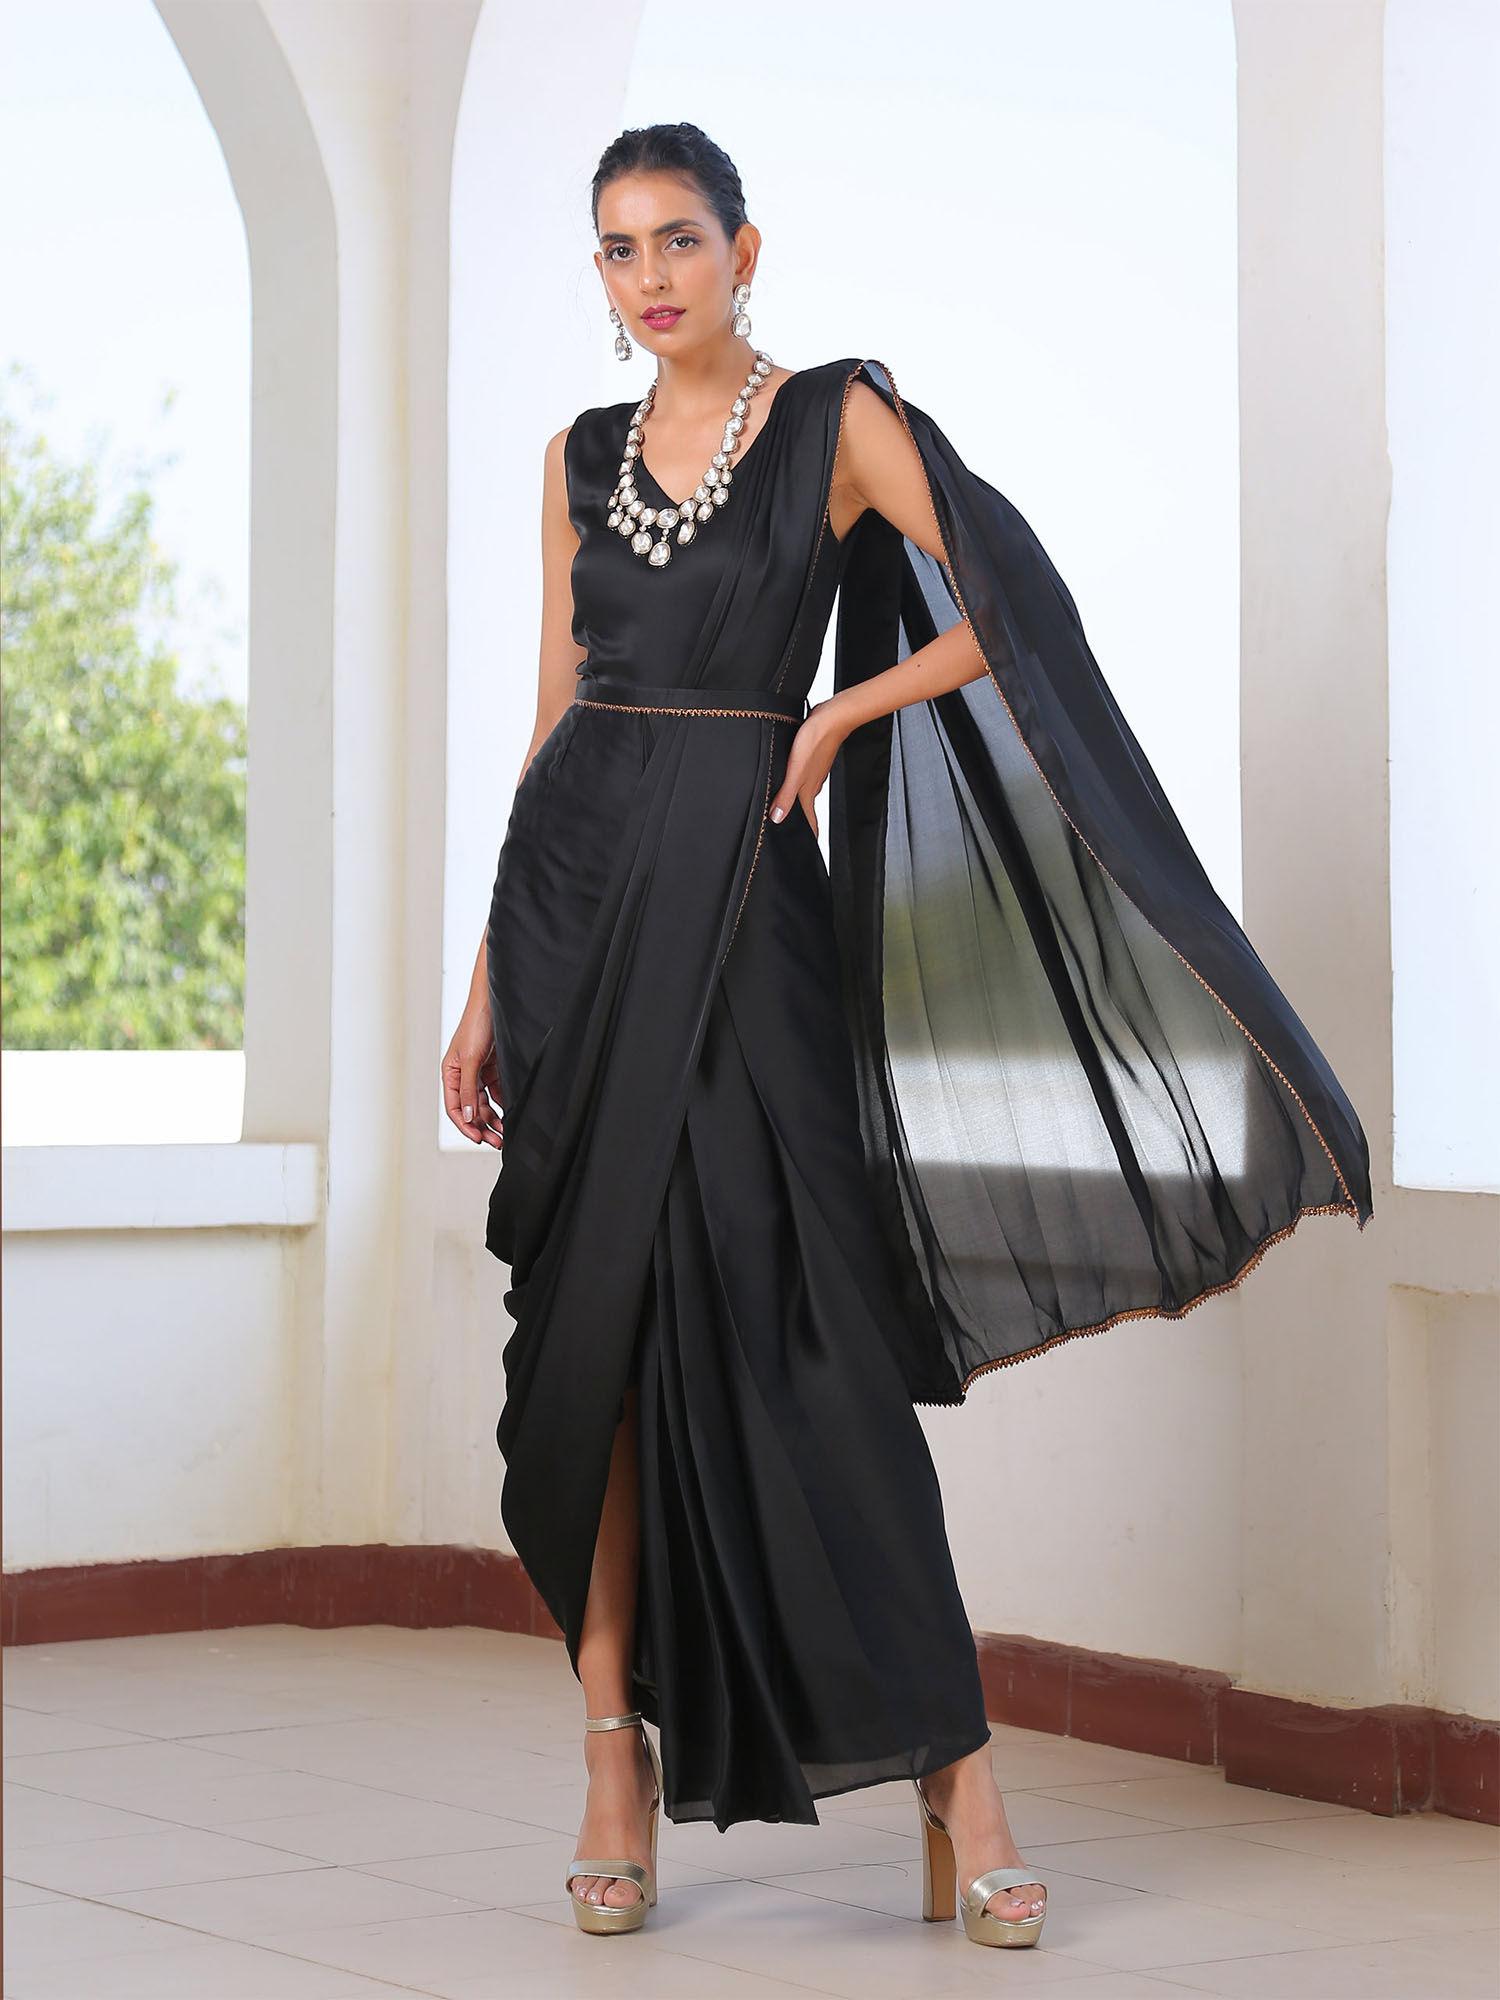 flattering black pleated dress style saree with belt